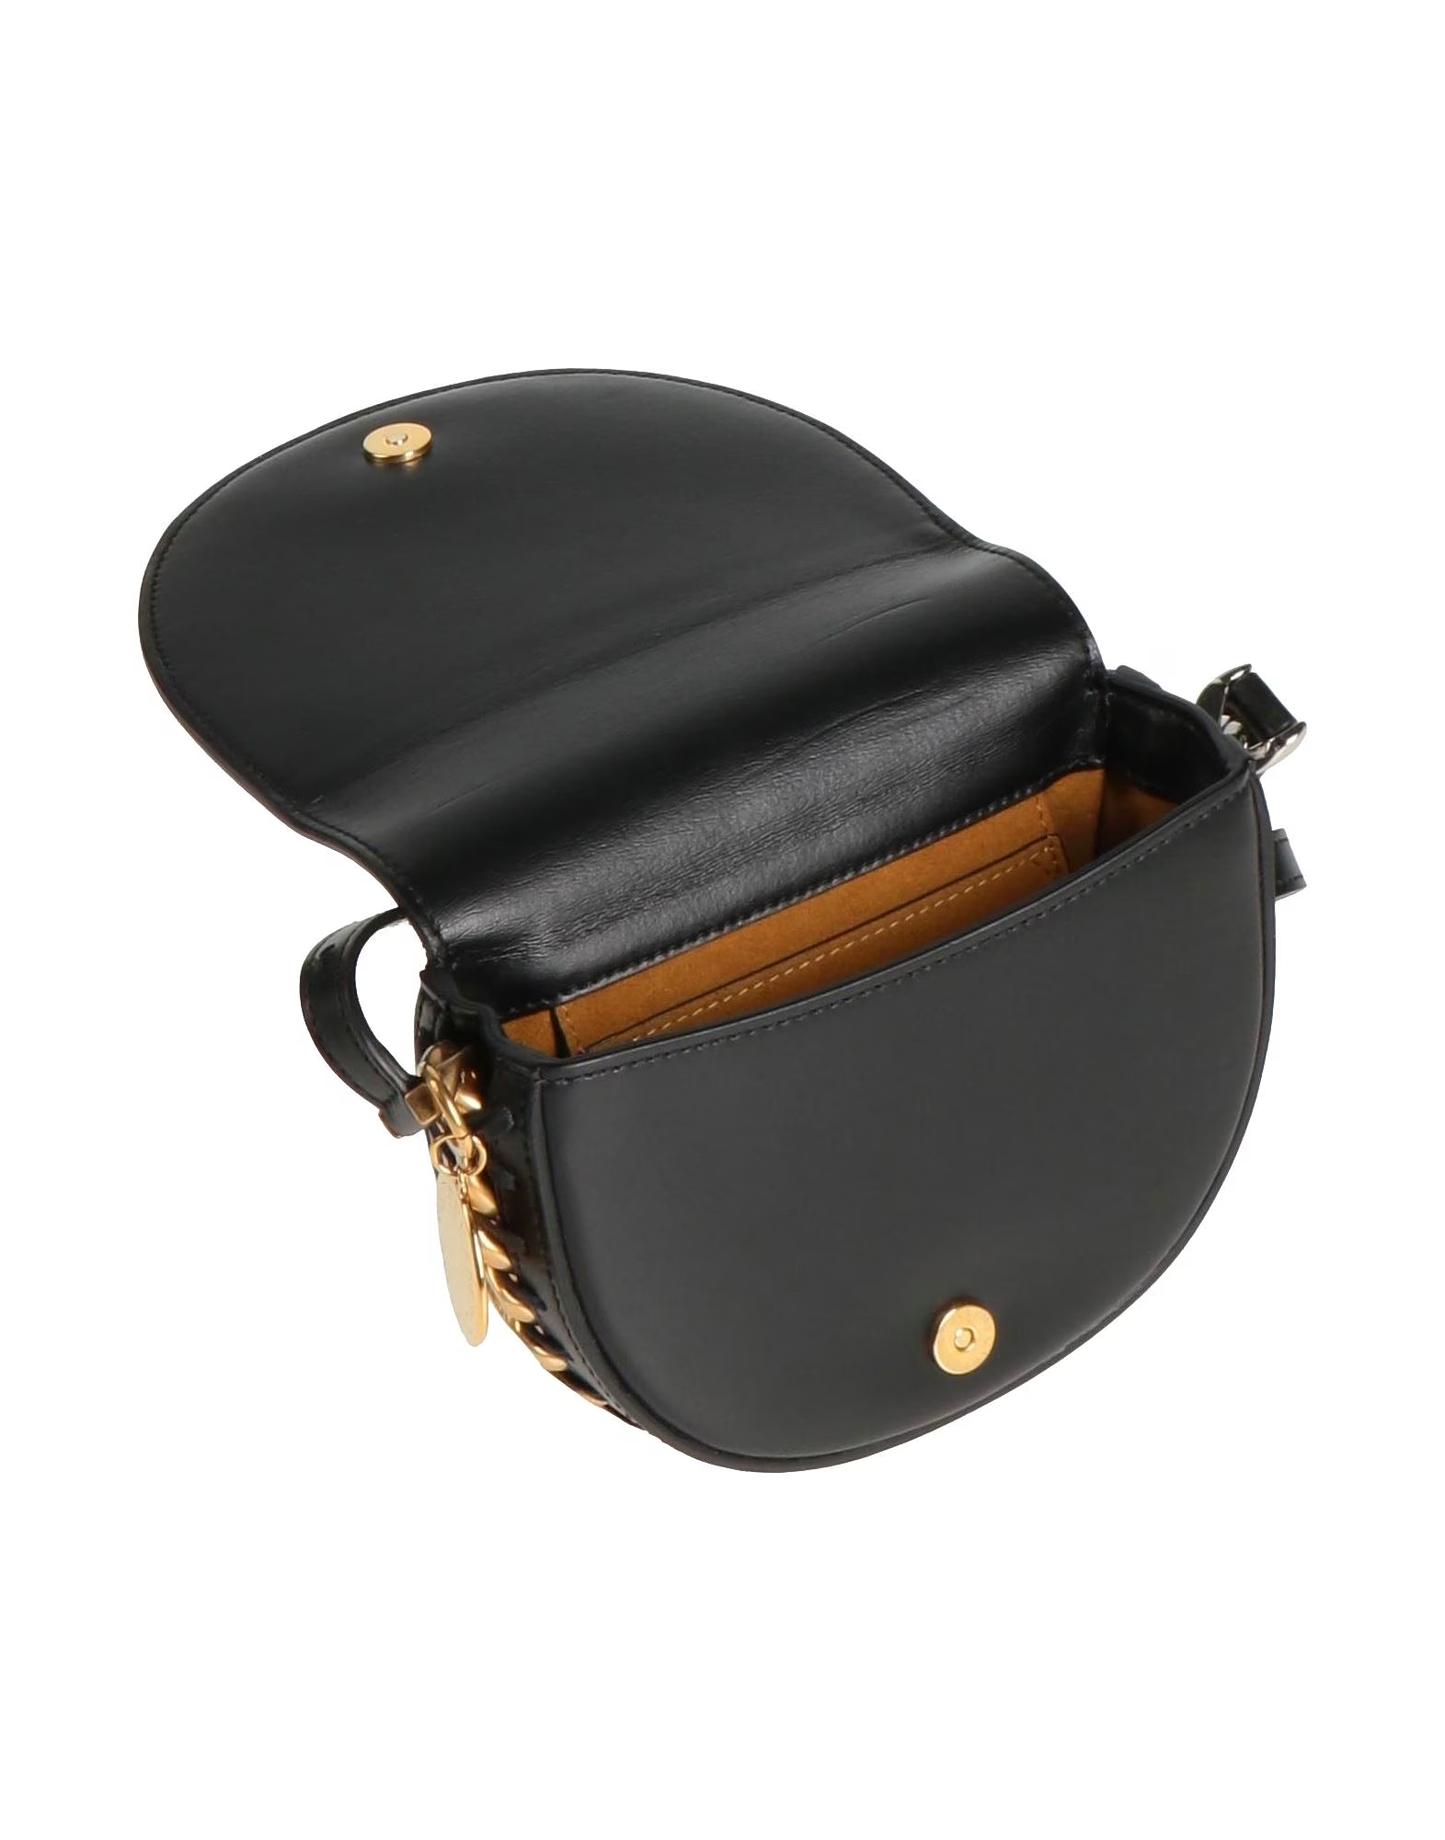 PARIOLI BAGS- STELLA McCARTNEY Shoulder Handbags - Black